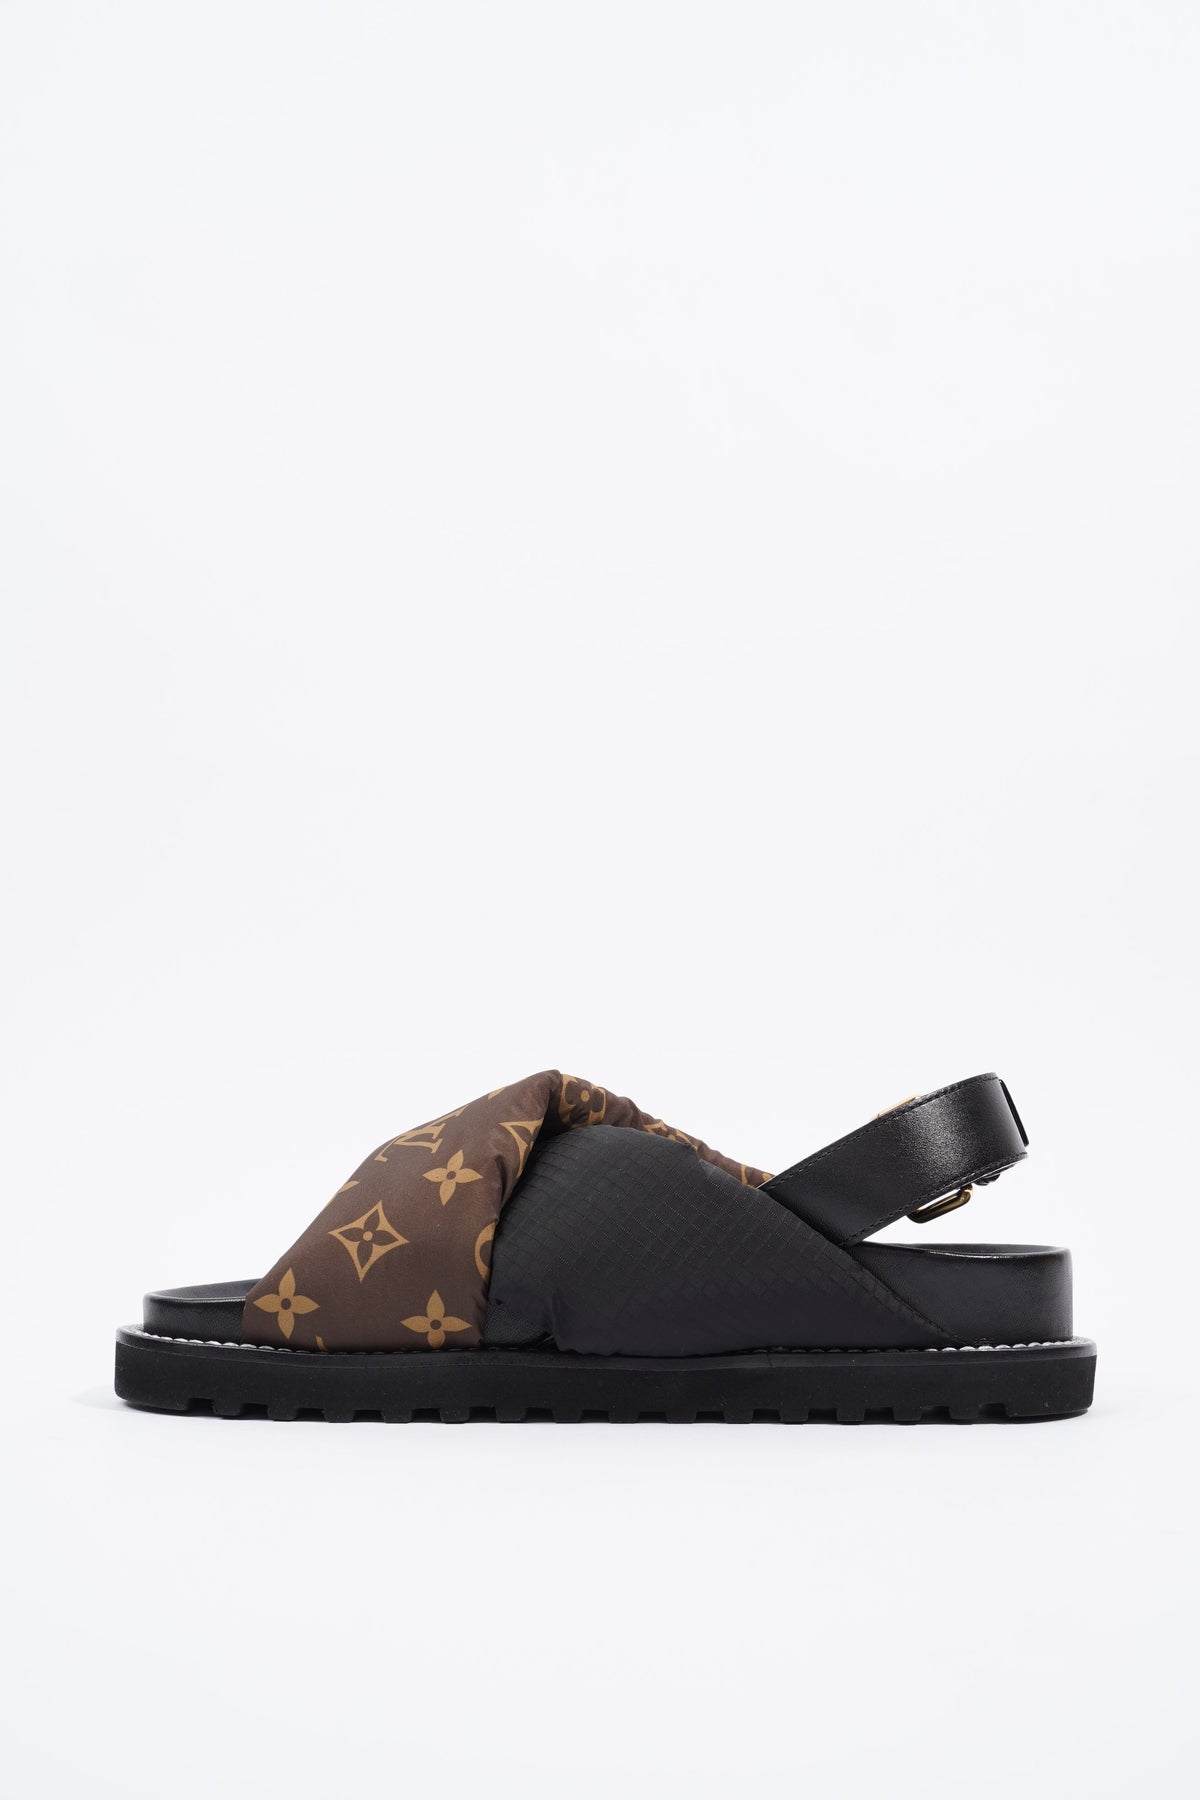 NEW Louis Vuitton Easy Slip On Sandals Monogram Black